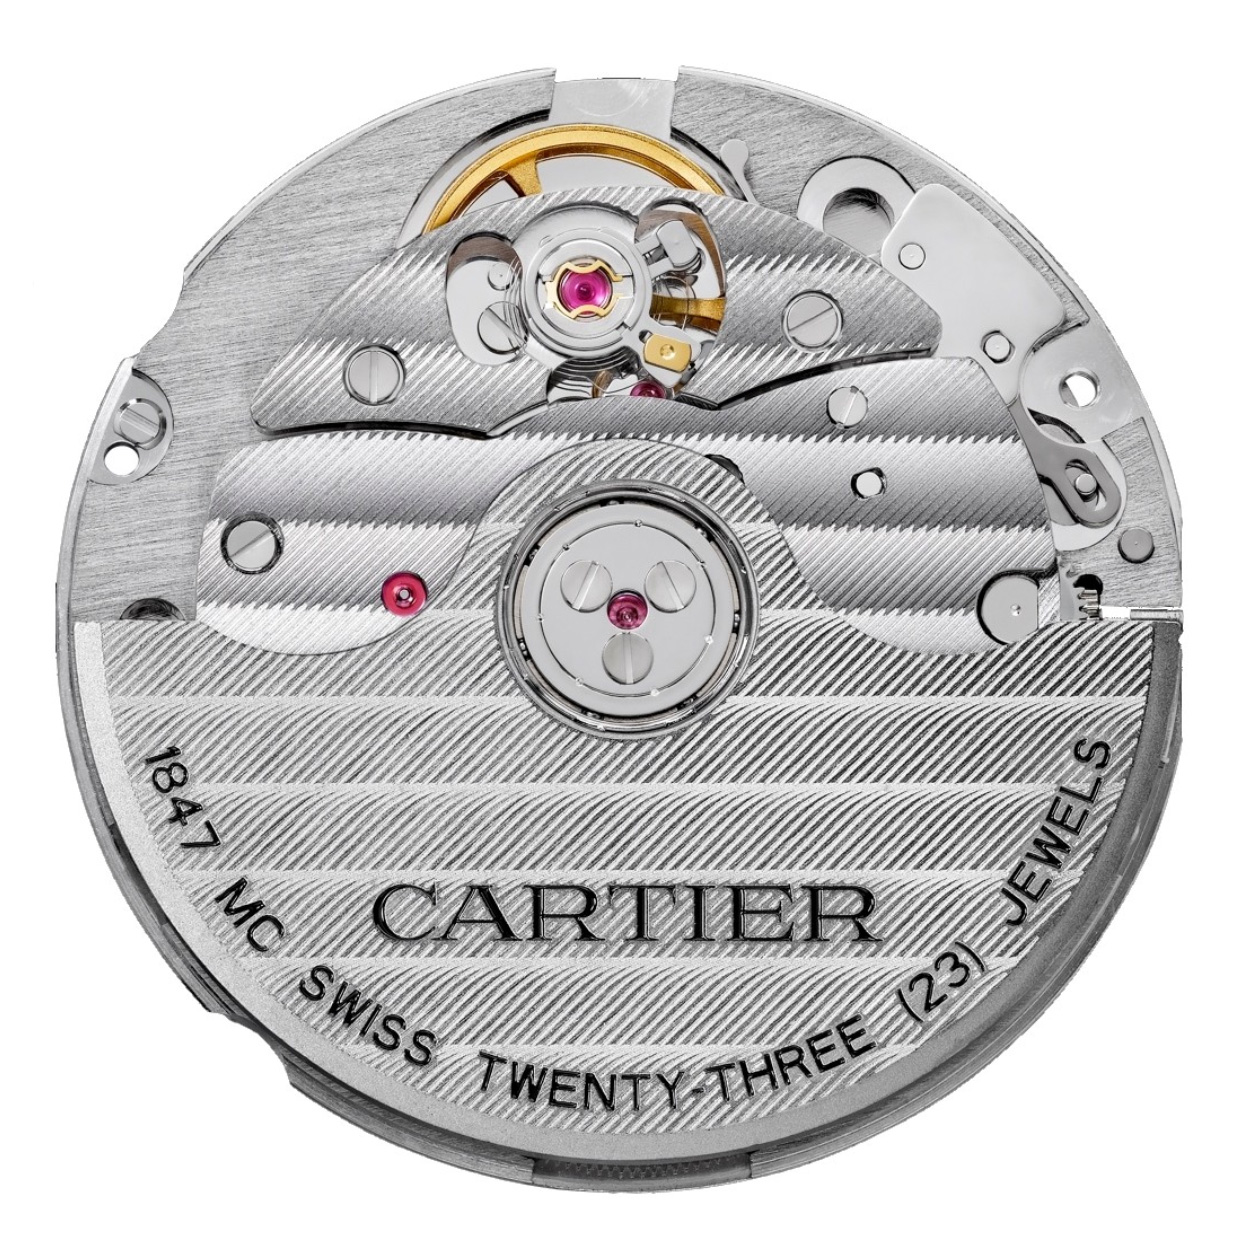 cartier 1847 mc movement review